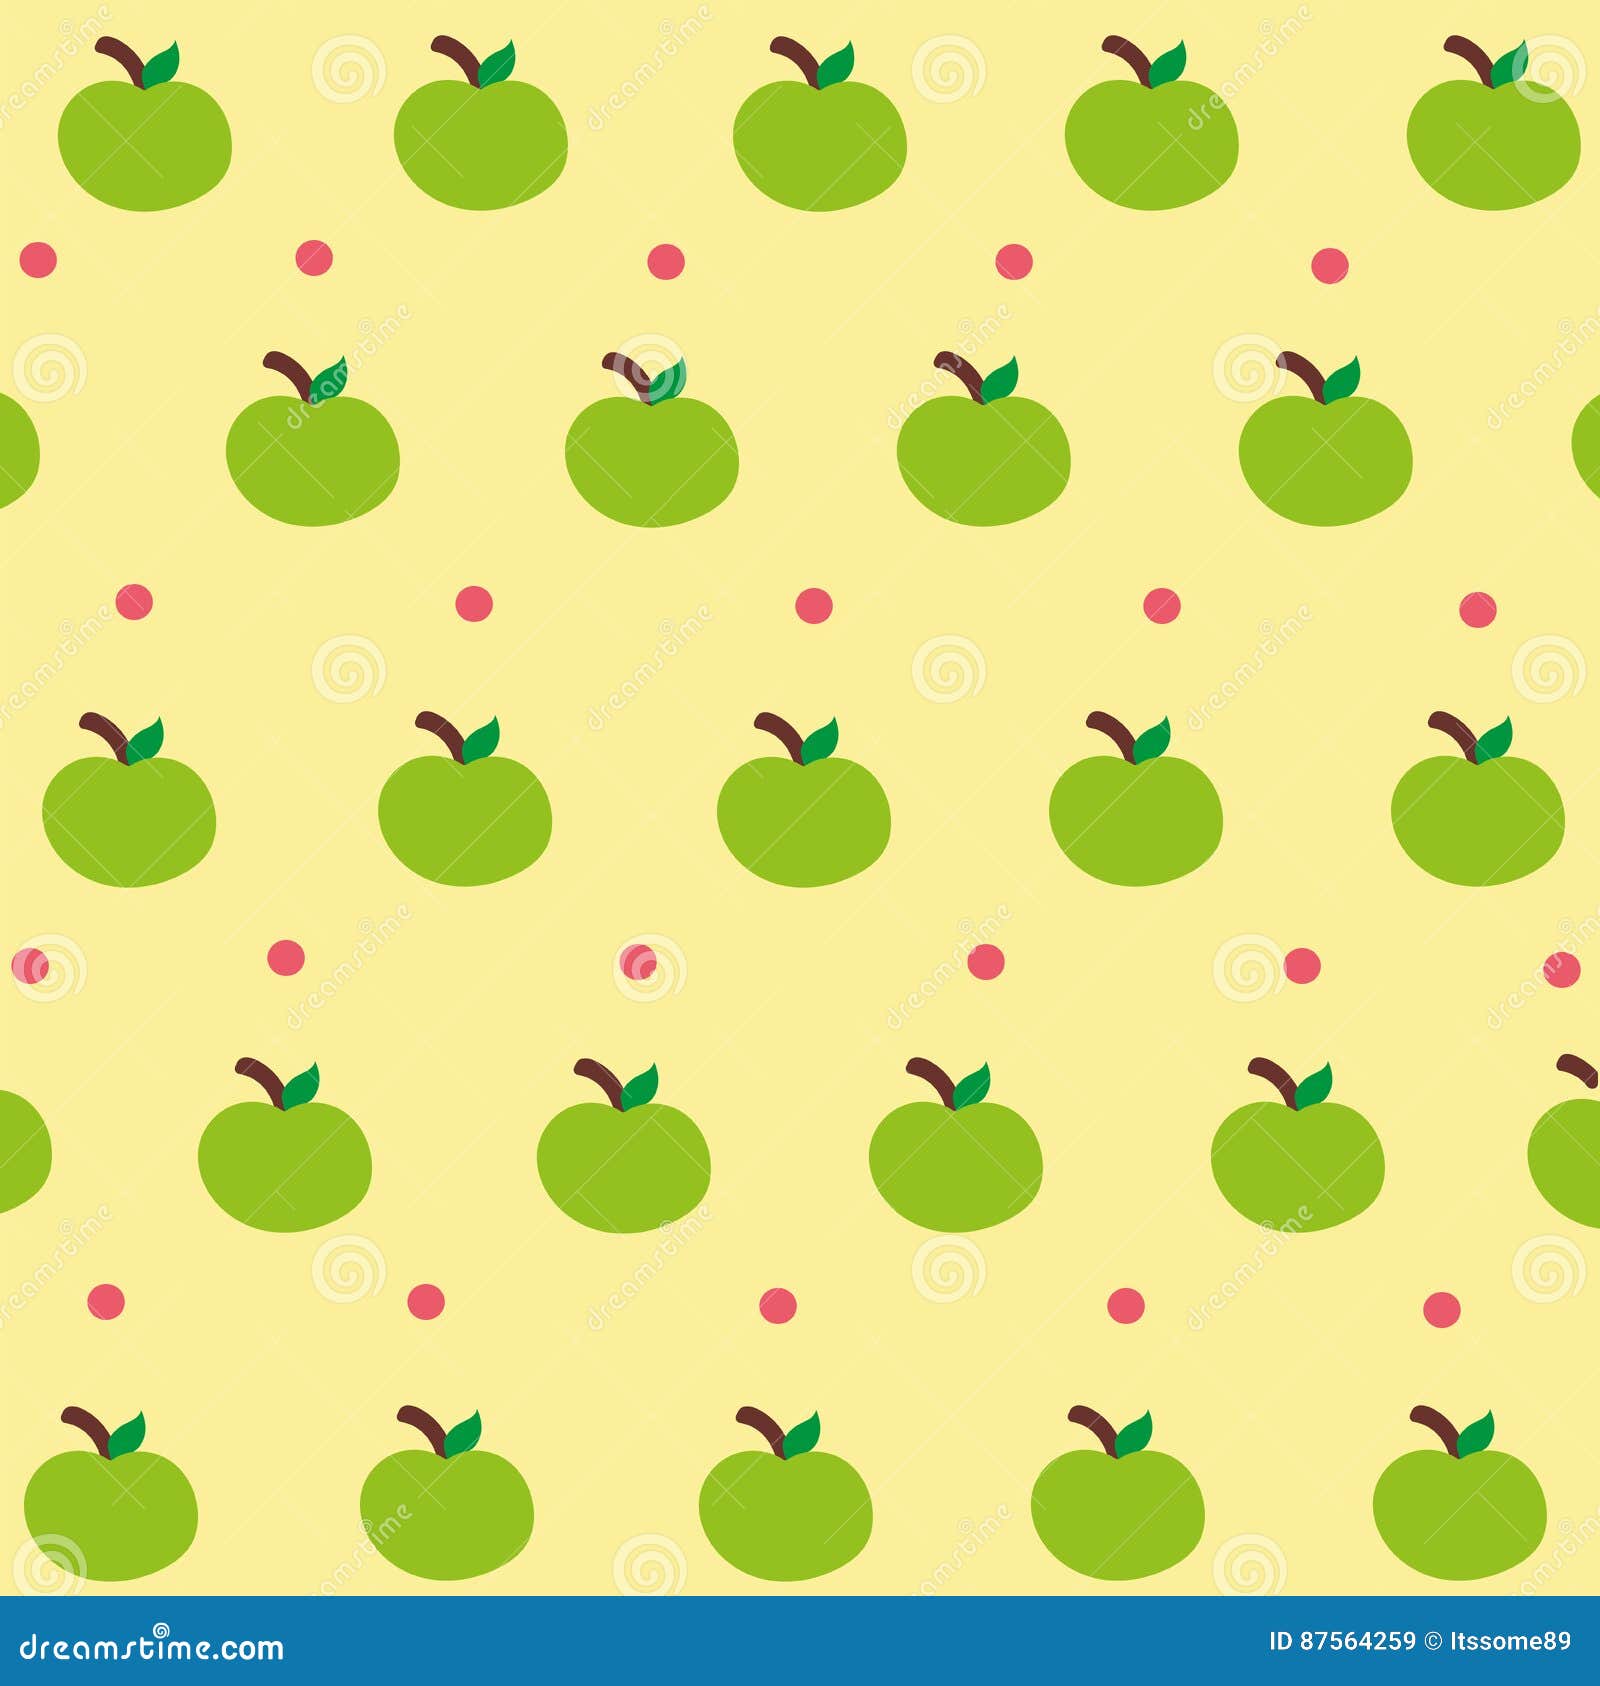 Apple Green Apple Logo  Bing images  Fondos de pantalla